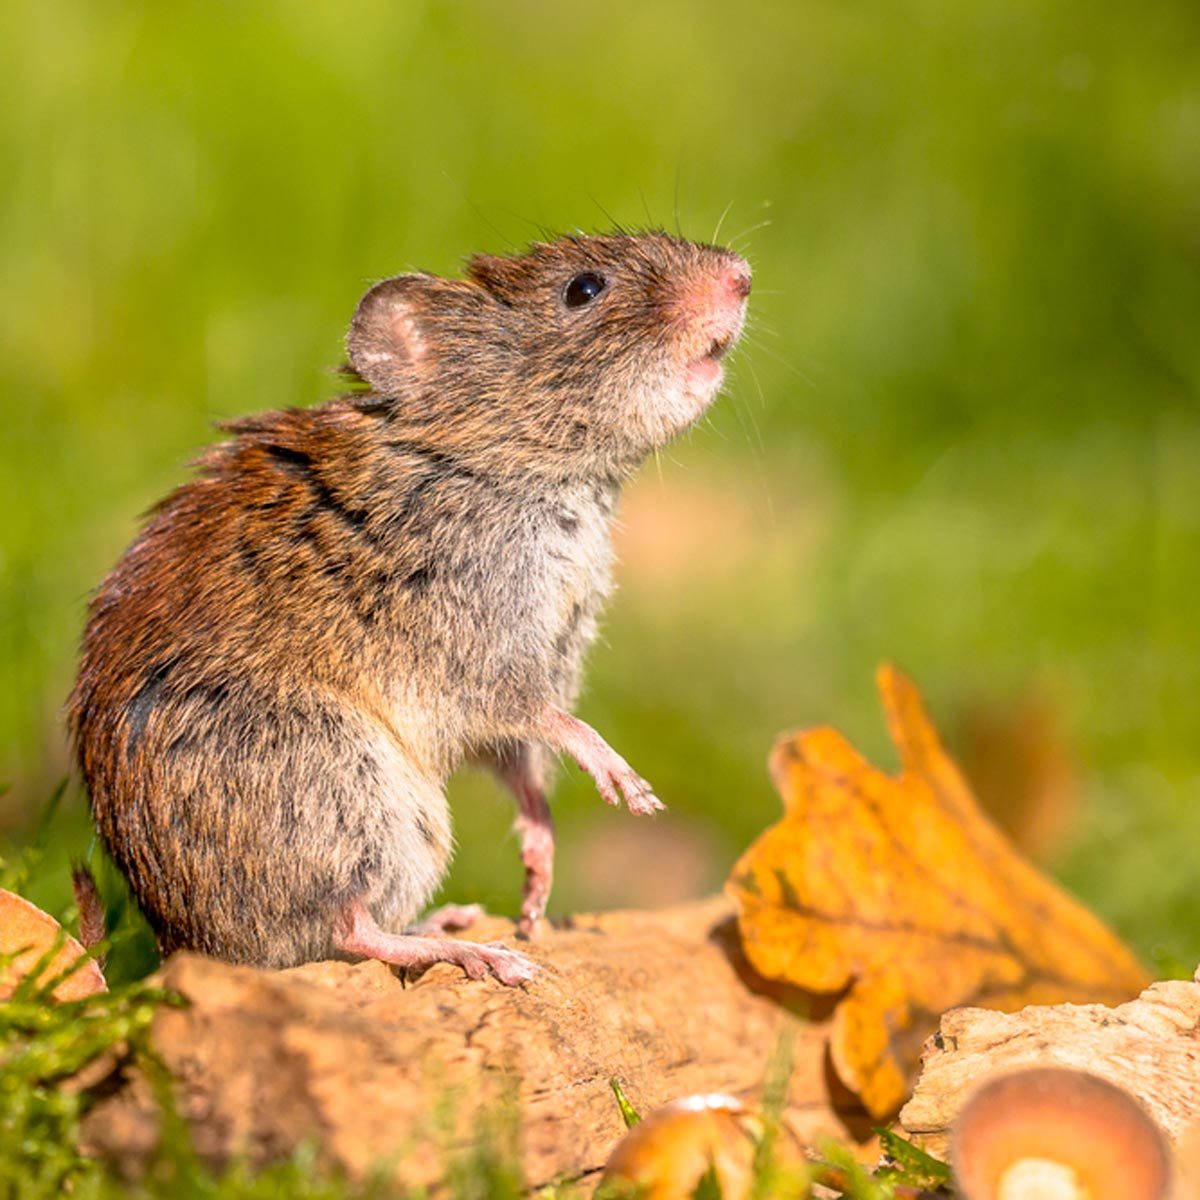 Rats kill remedies natural to The 8